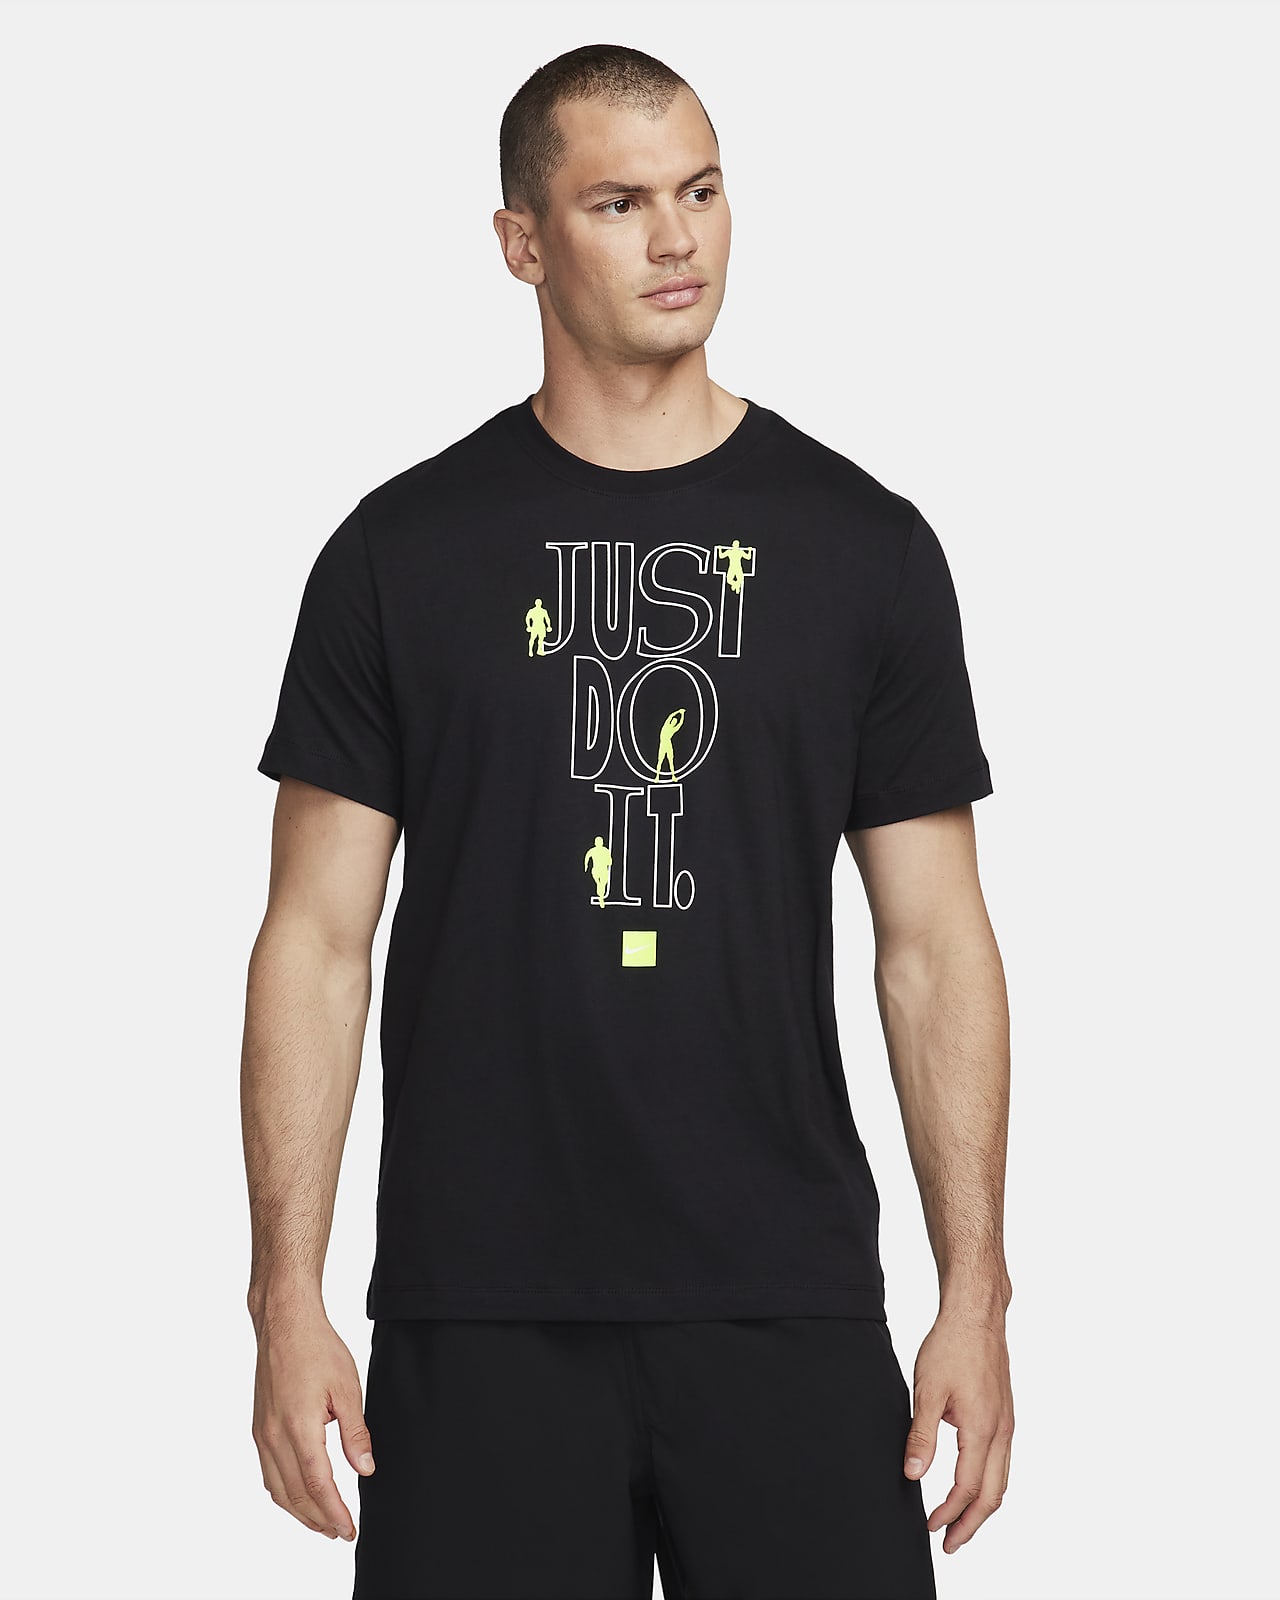 Nike Camiseta deportiva - Hombre